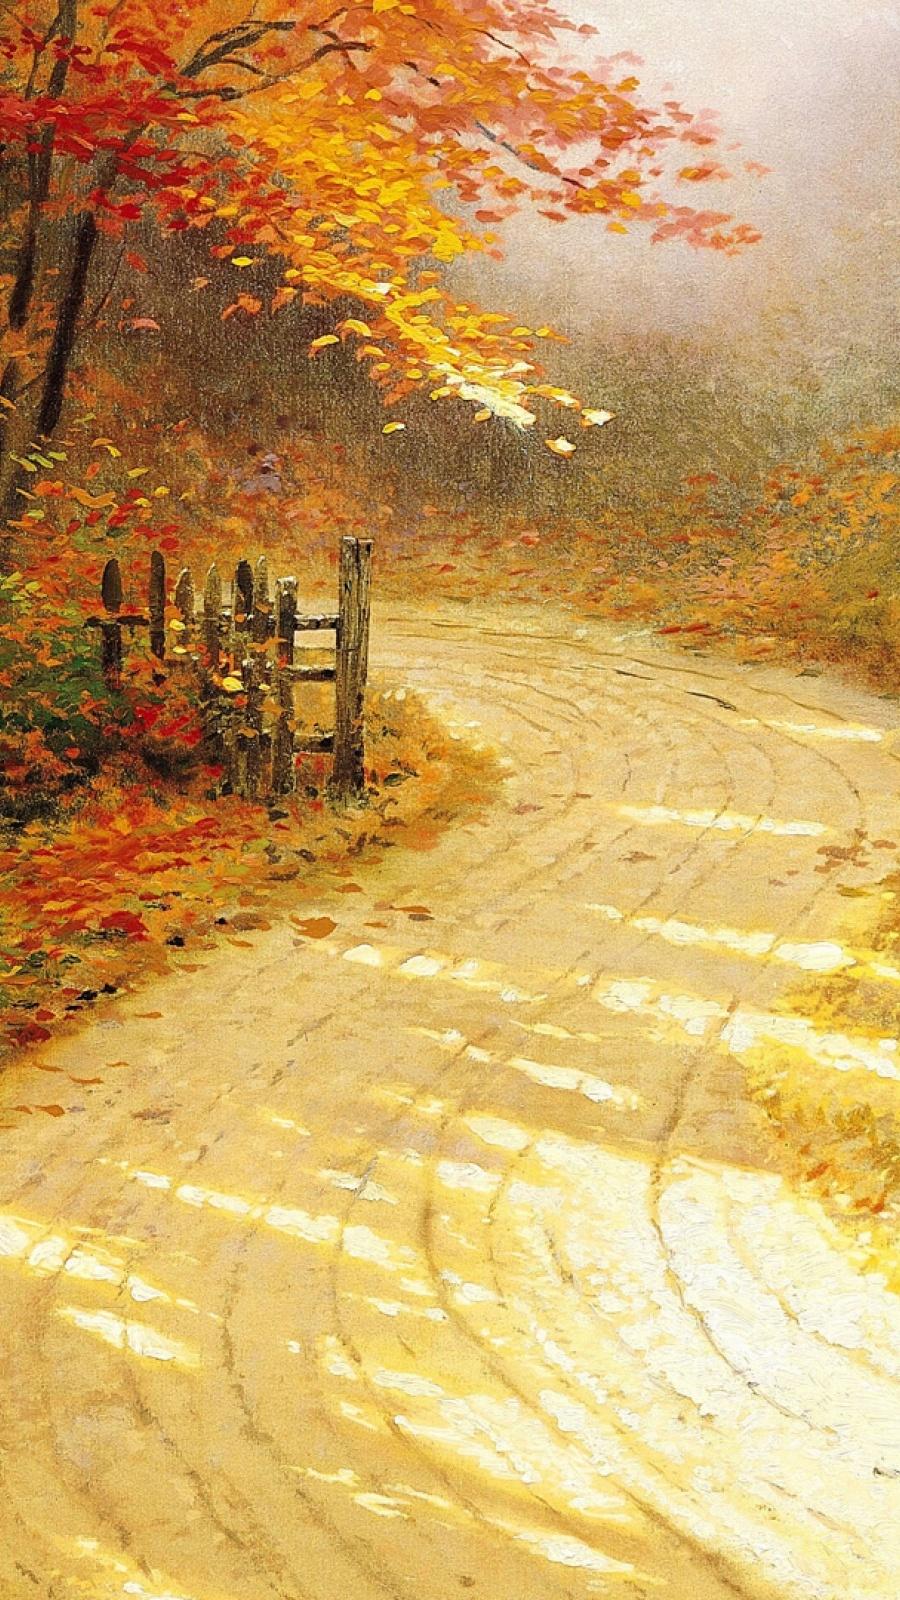 Golden Autumn Road Mobile Wallpaper